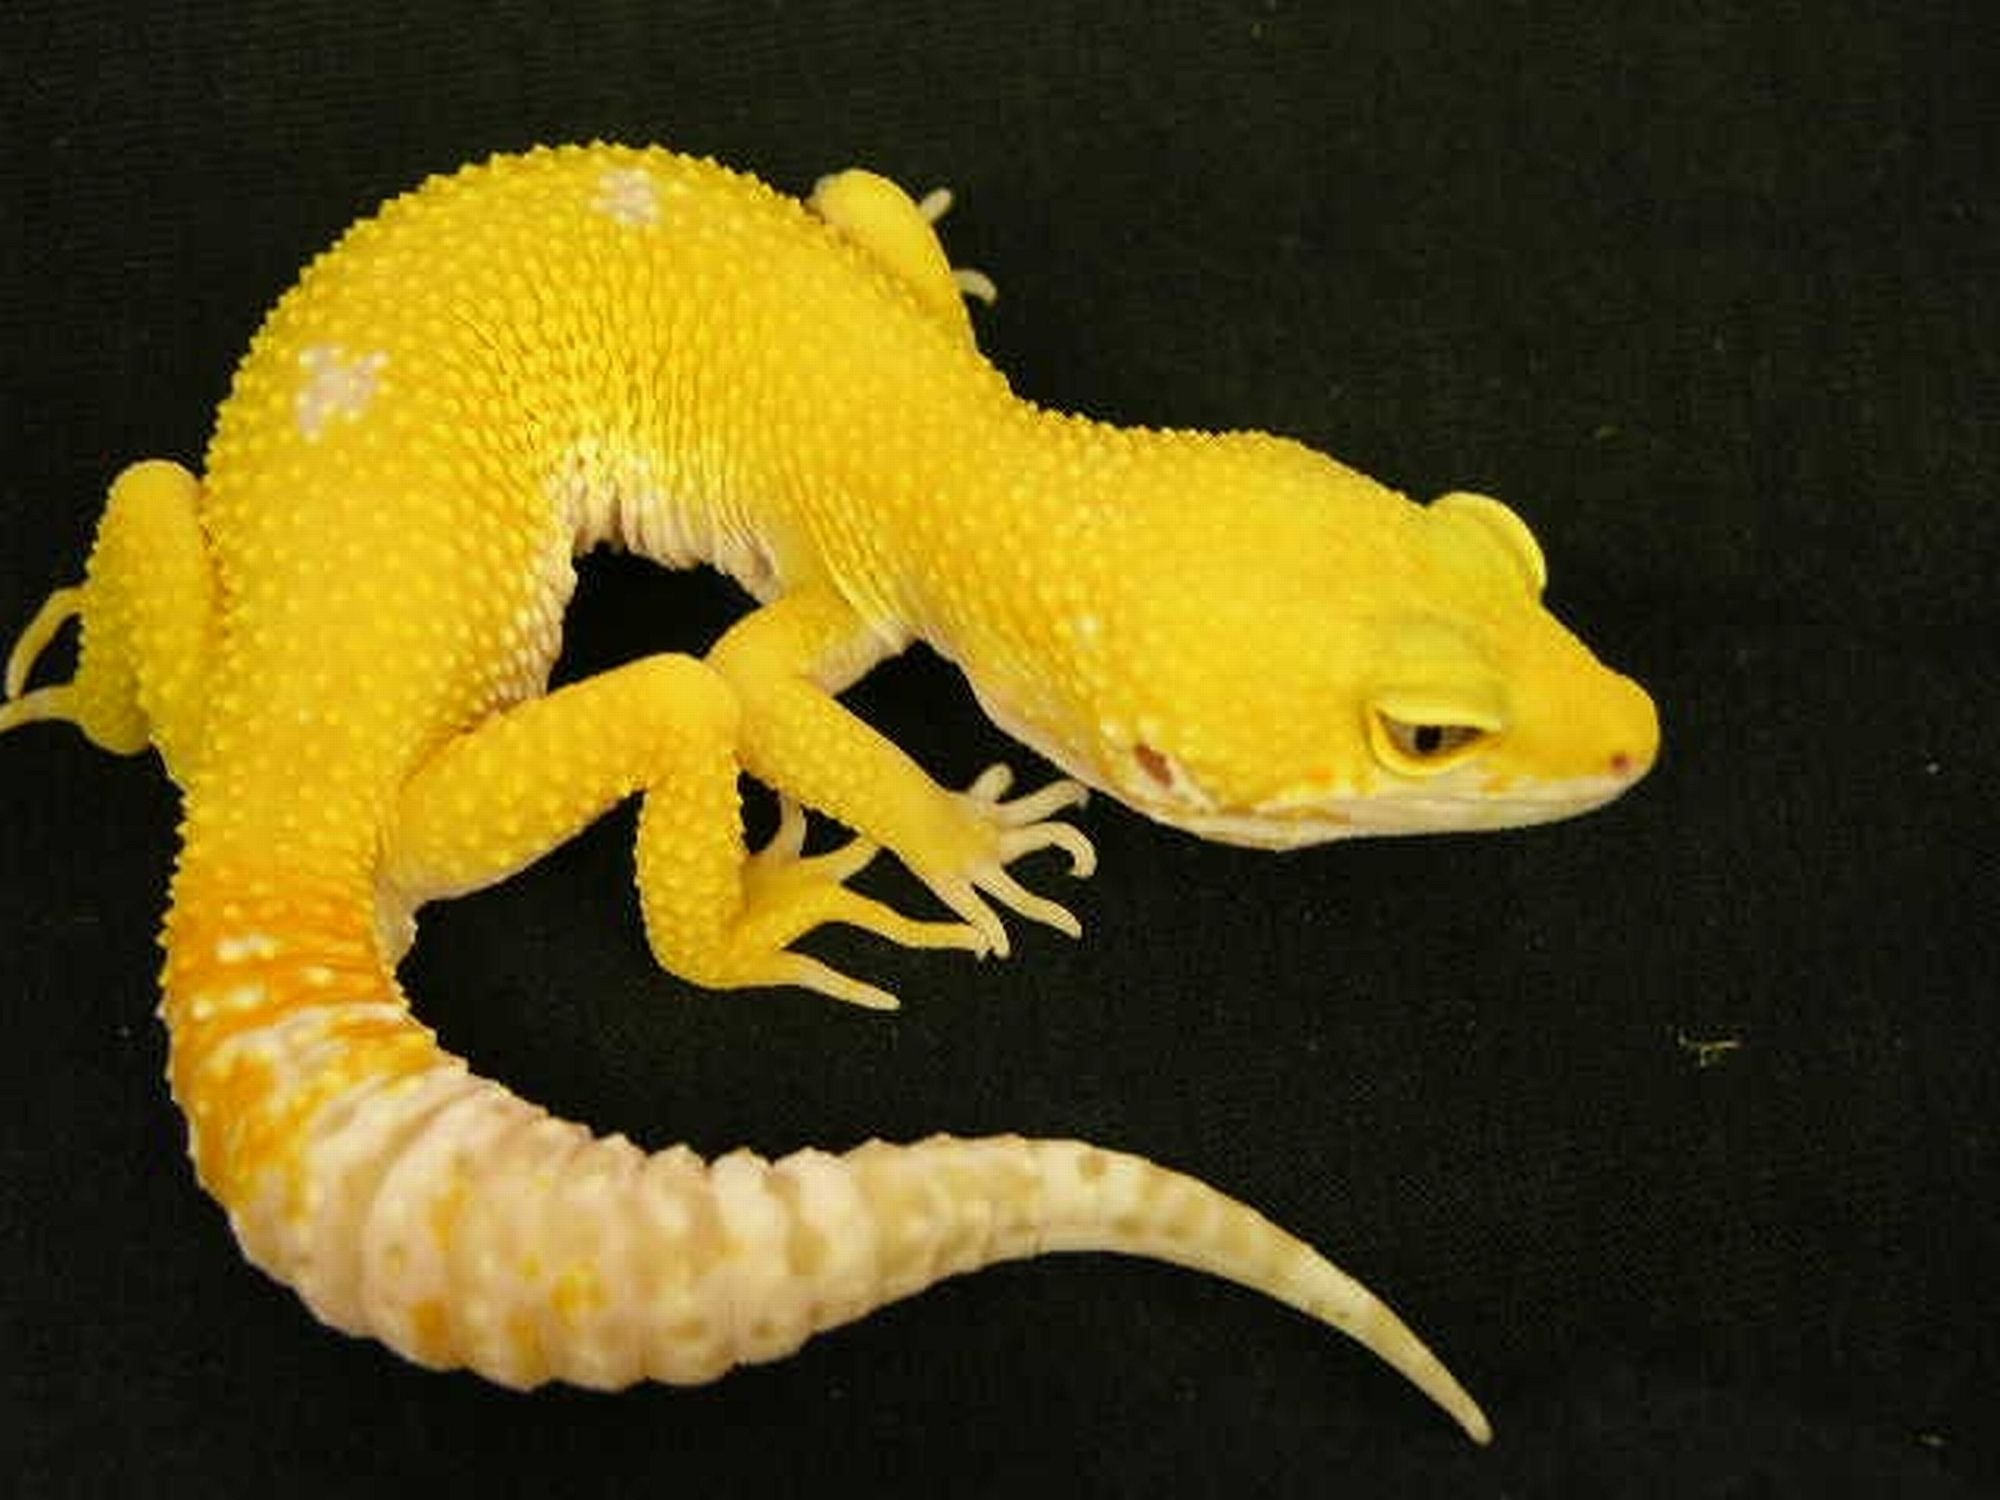 Черно желтая ящерица. Геккон эублефар желтый. Ящерица геккон эублефар. Ящерица эублефар желтая. Эублефар желтый.